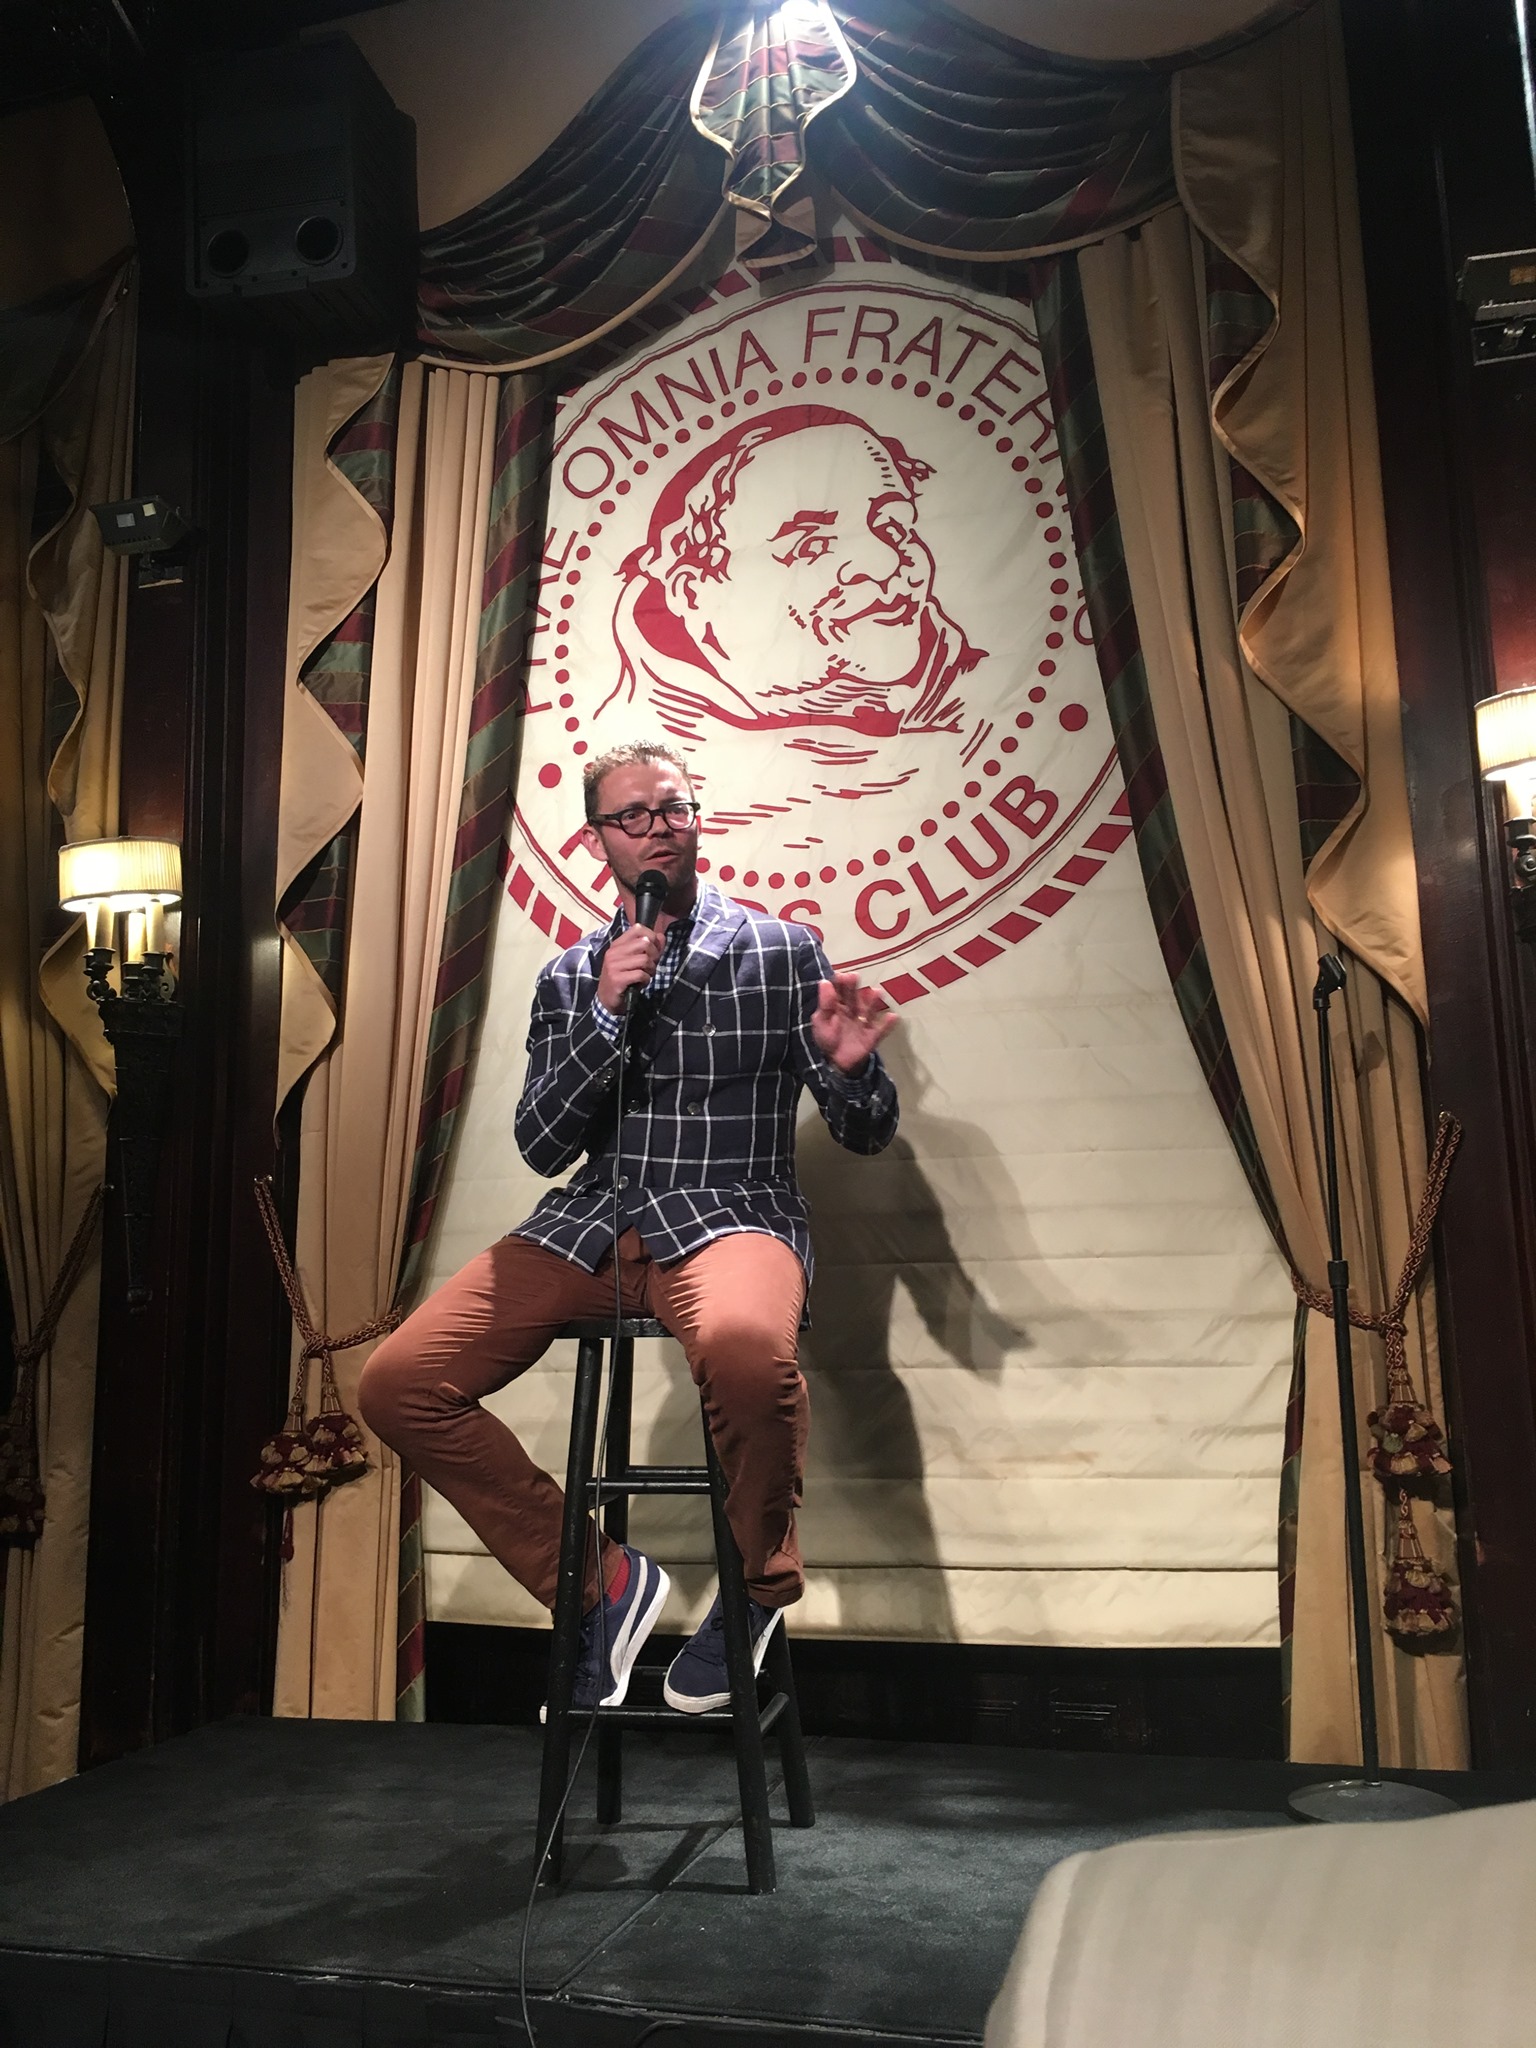 Friars Club Comedy Night Tickets | New York | TodayTix